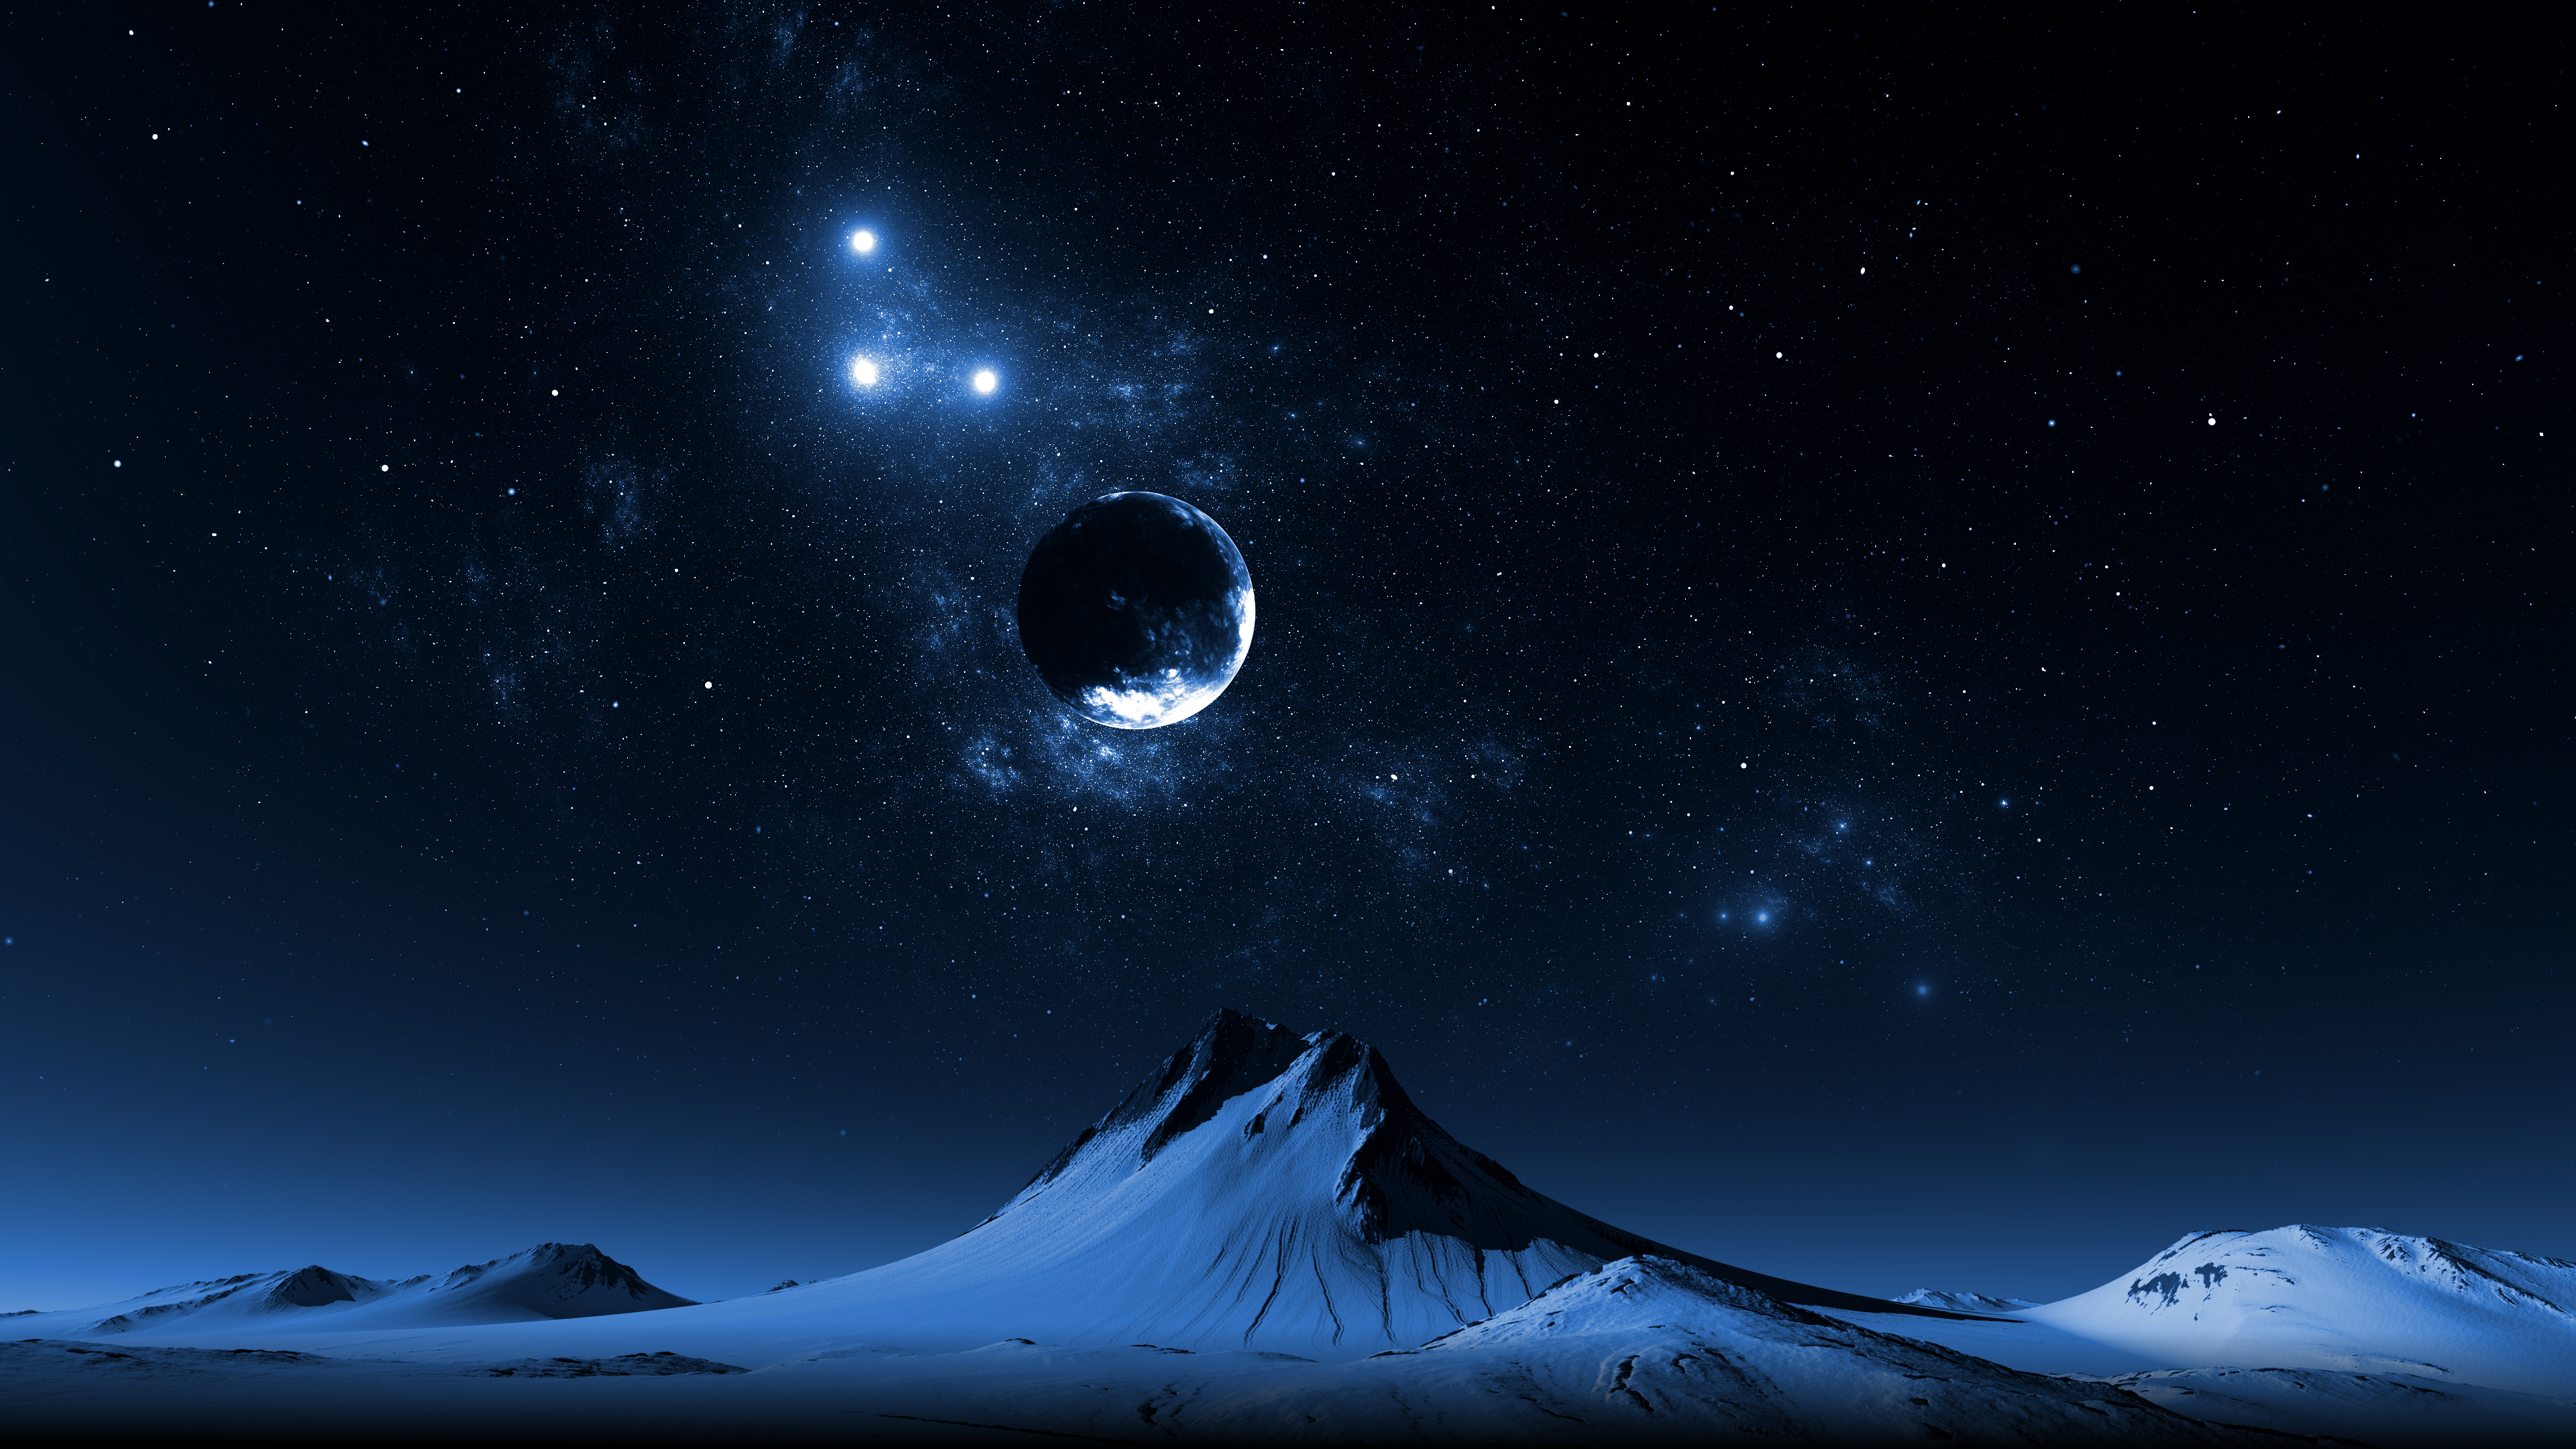 Hypnoshot Digital Digital Art Artwork Illustration Nature Nightscape Landscape Galaxy Stars Mountain 3840x2160